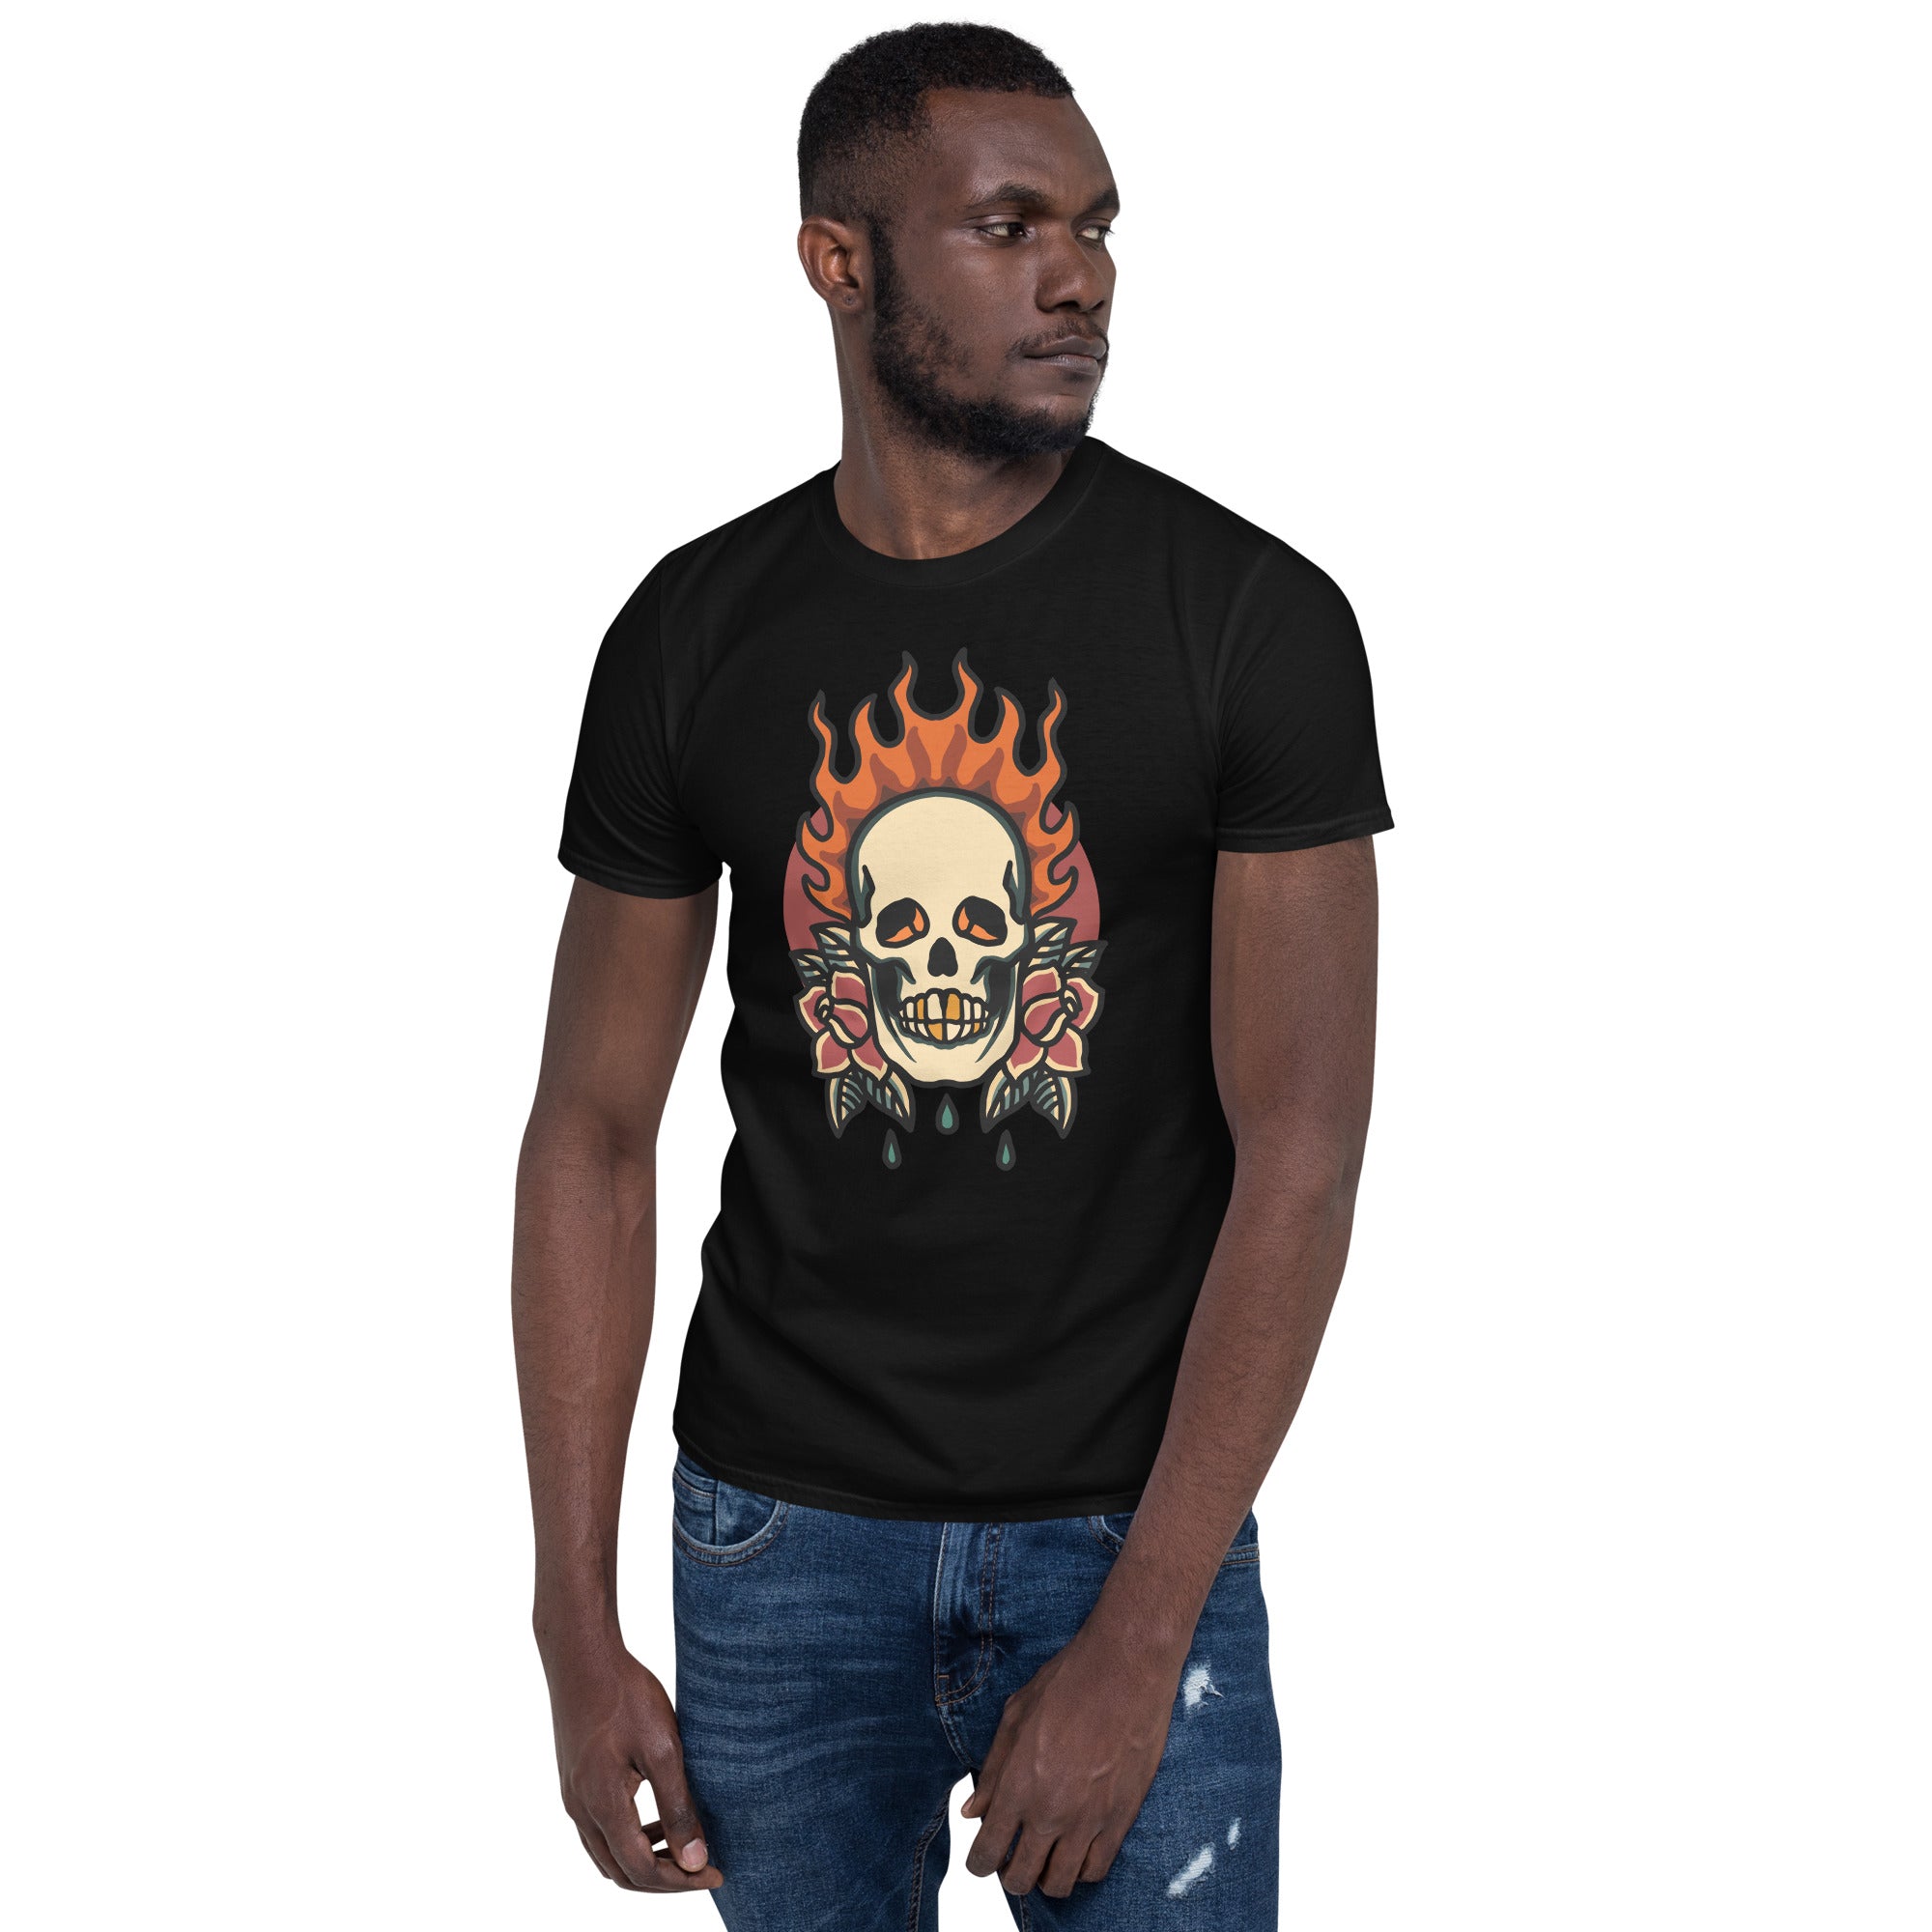 Burning Skull And Roses - Short-Sleeve Unisex T-Shirt